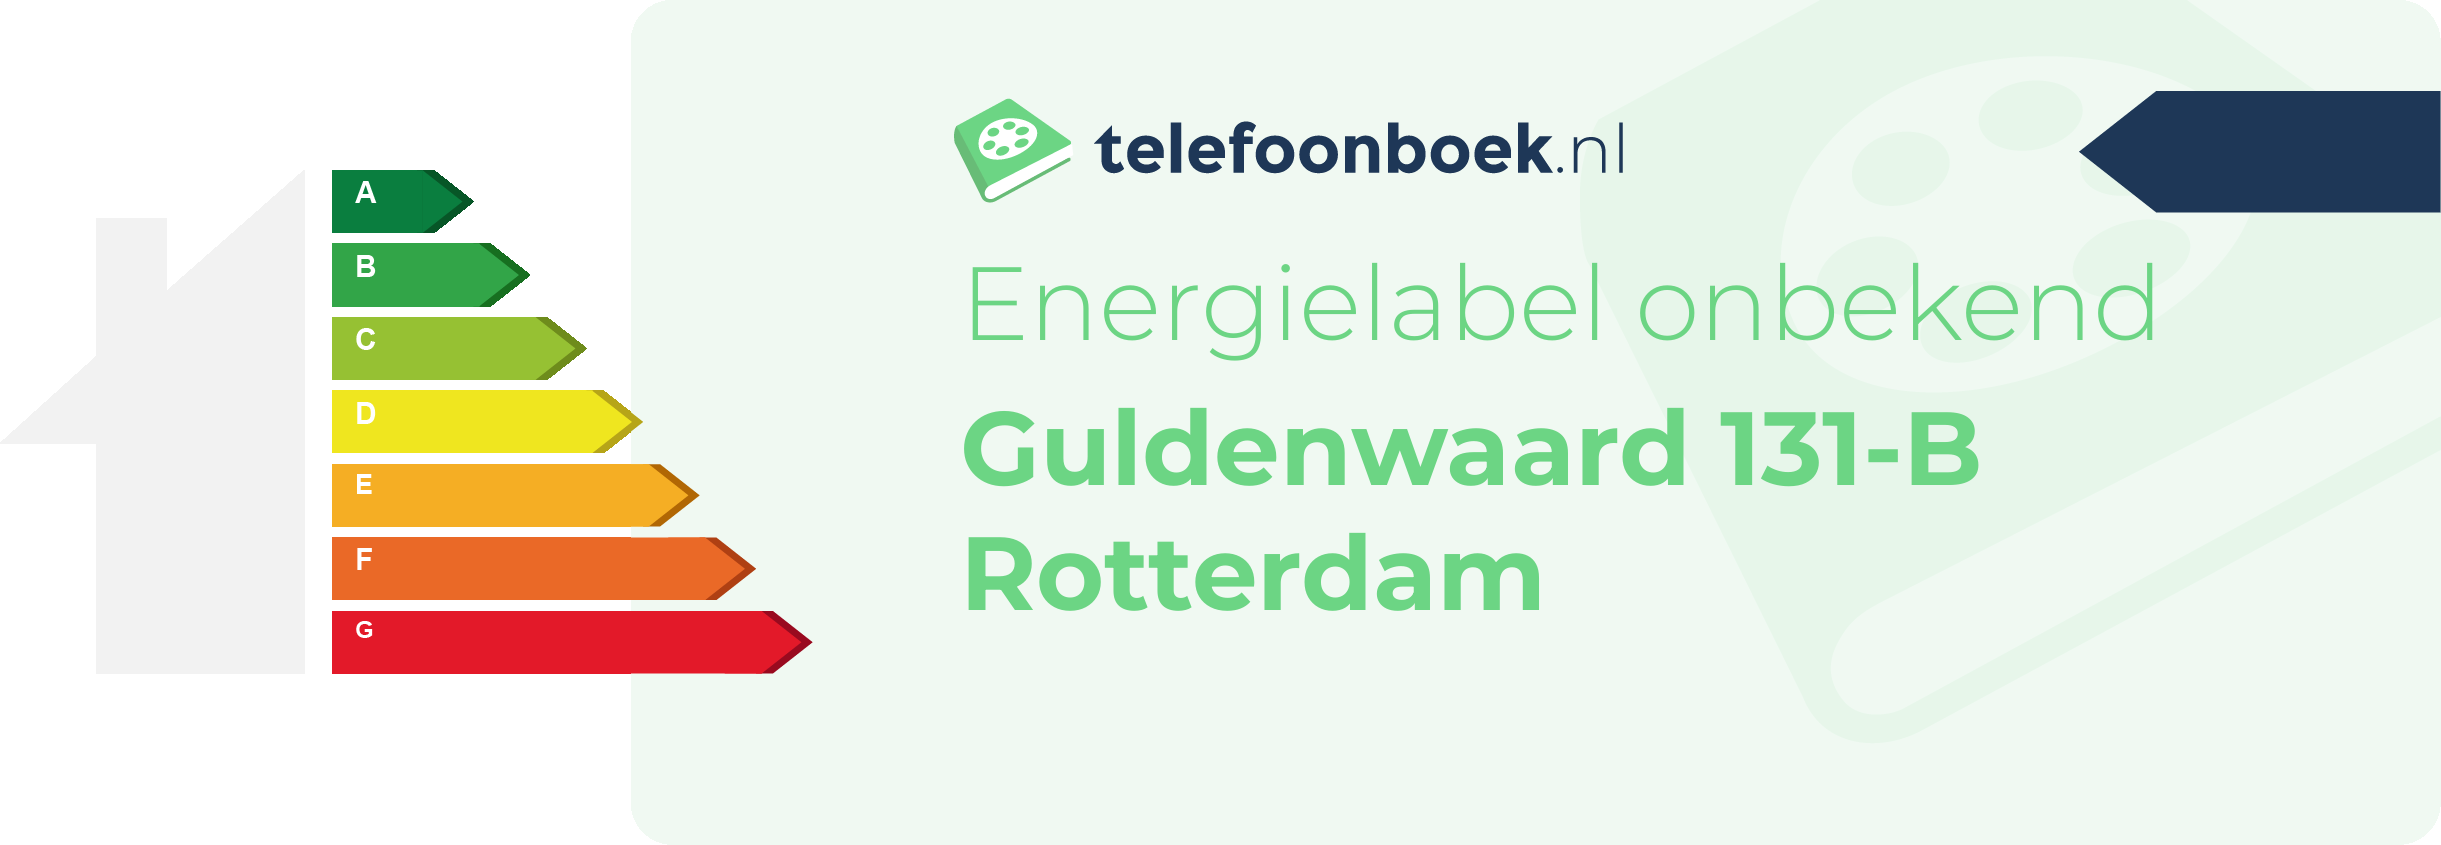 Energielabel Guldenwaard 131-B Rotterdam